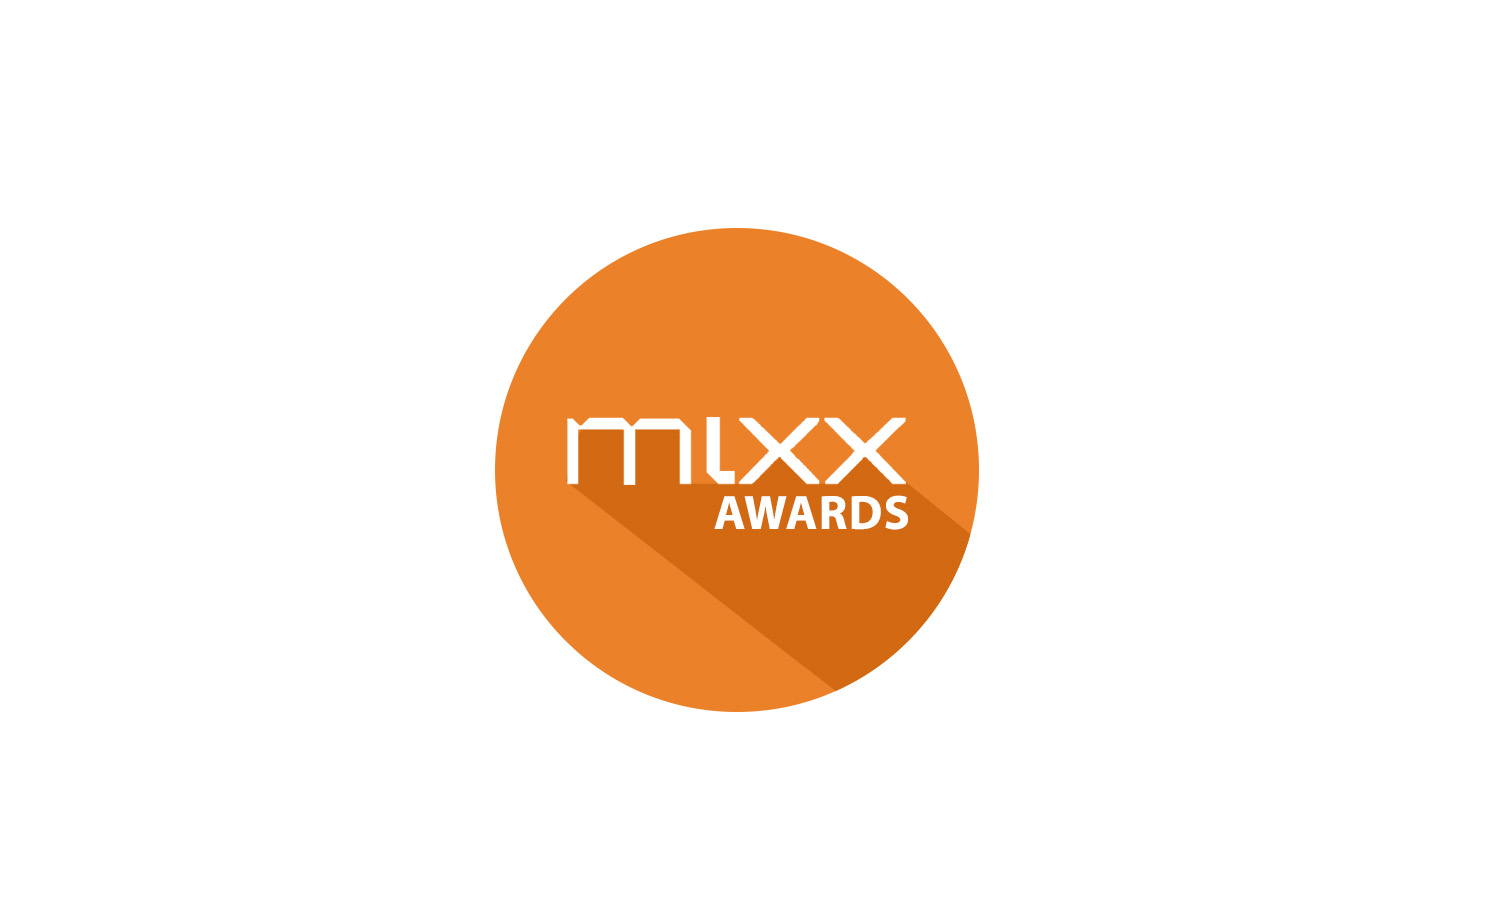 Biuro Podróży Reklamy has been nominated for MIXX Awards 2014